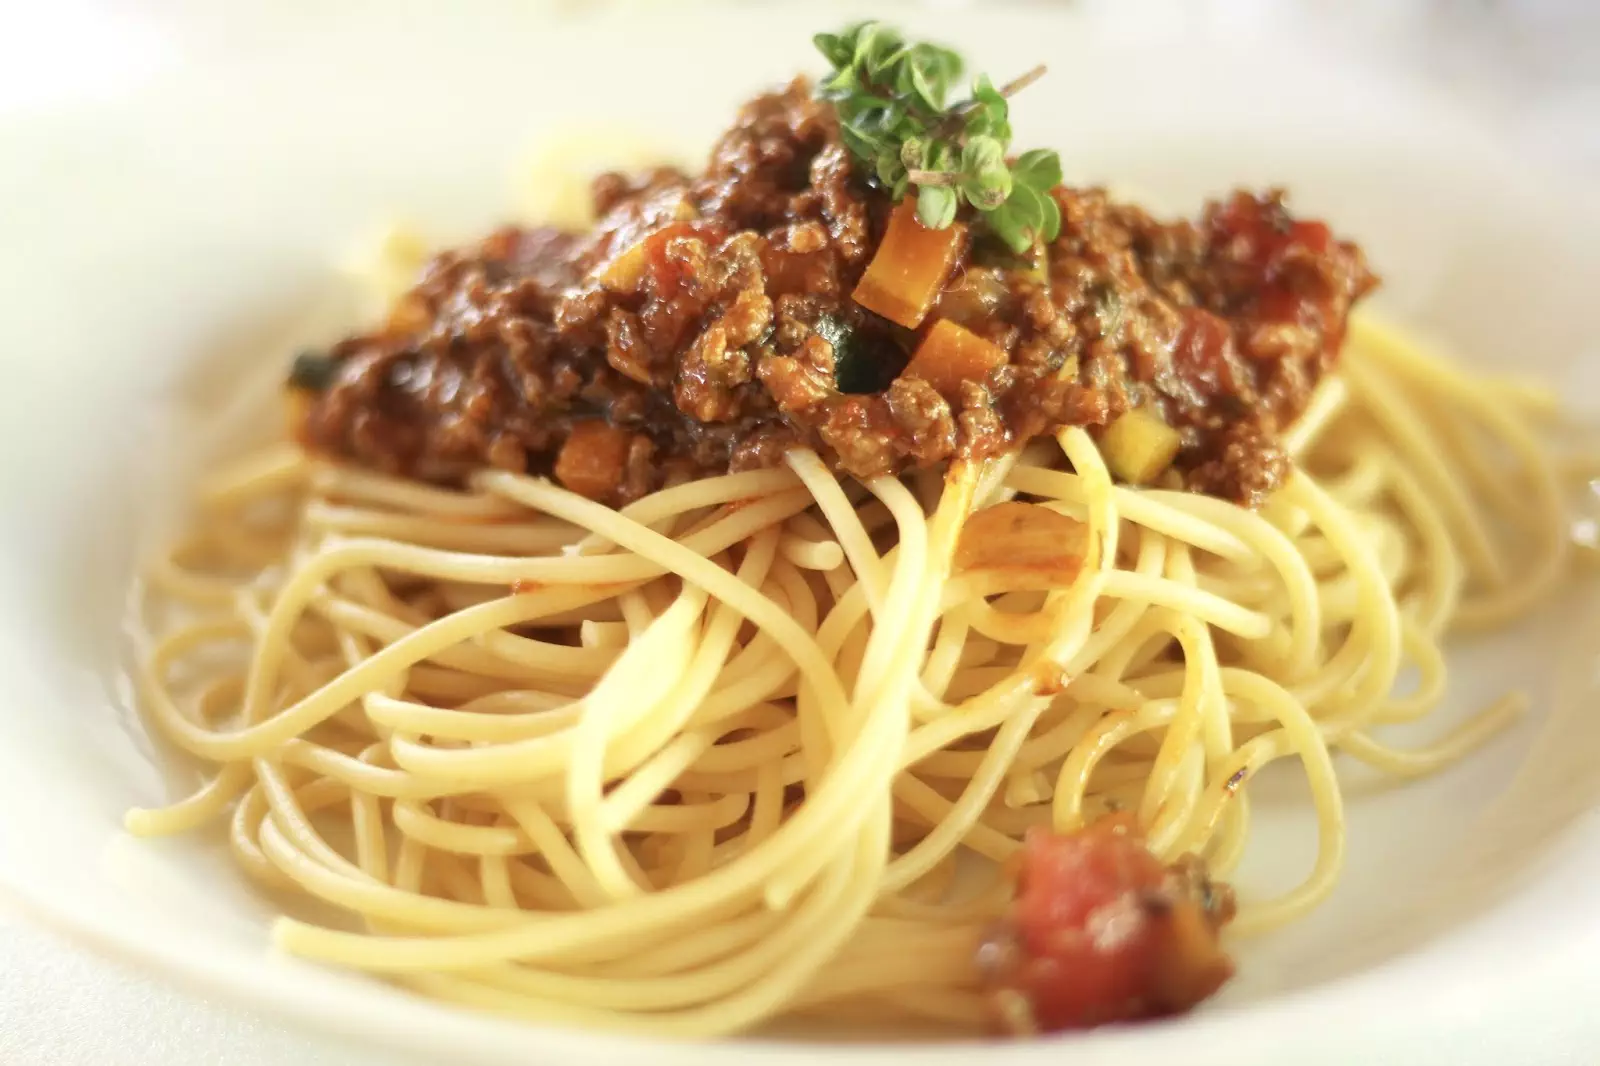 Rezept für leckere Spaghetti Bolognese à la Yushka mit Geheimzutaten: Leserwunsch